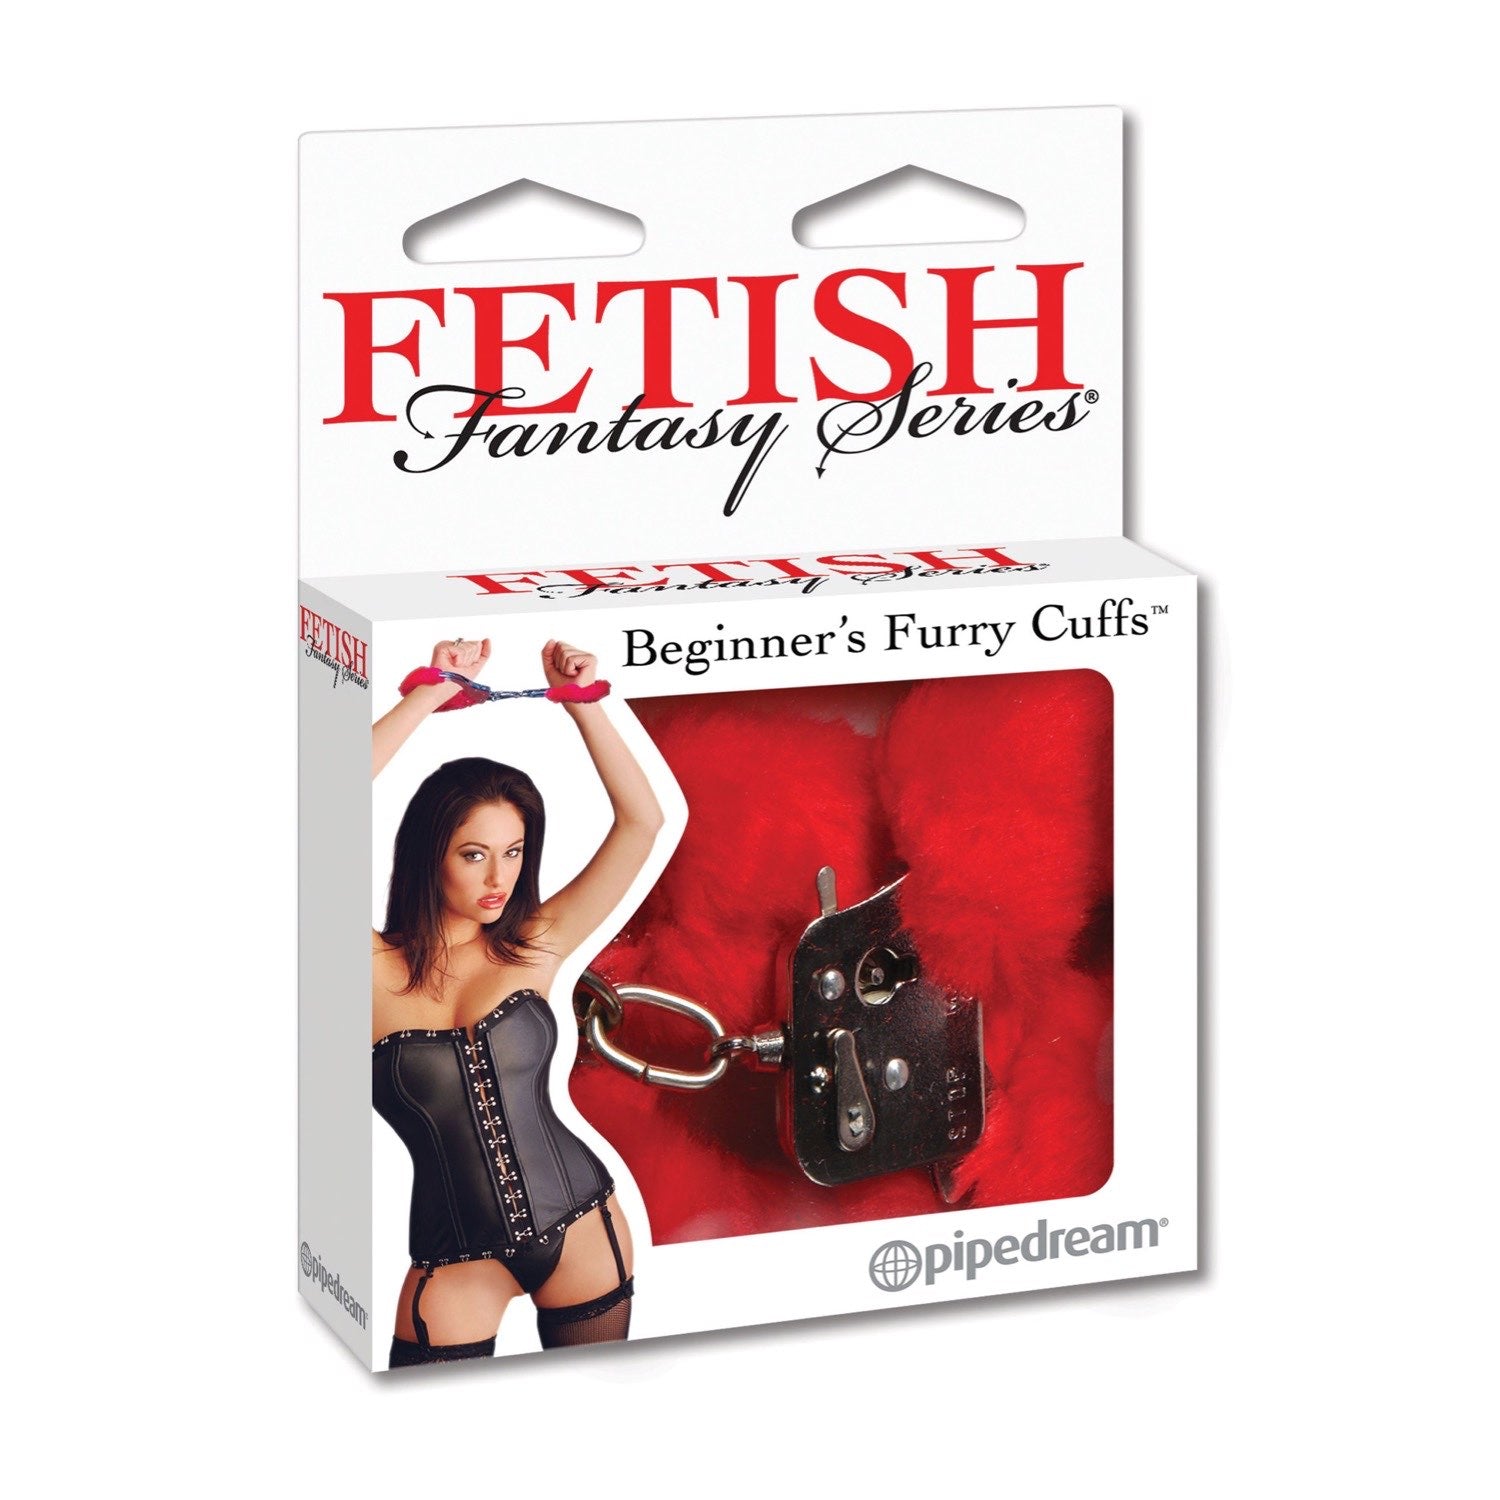 Fetish Fantasy Series Beginner&#39;s Furry Cuffs - Red Fluffy Cuffs by Pipedream